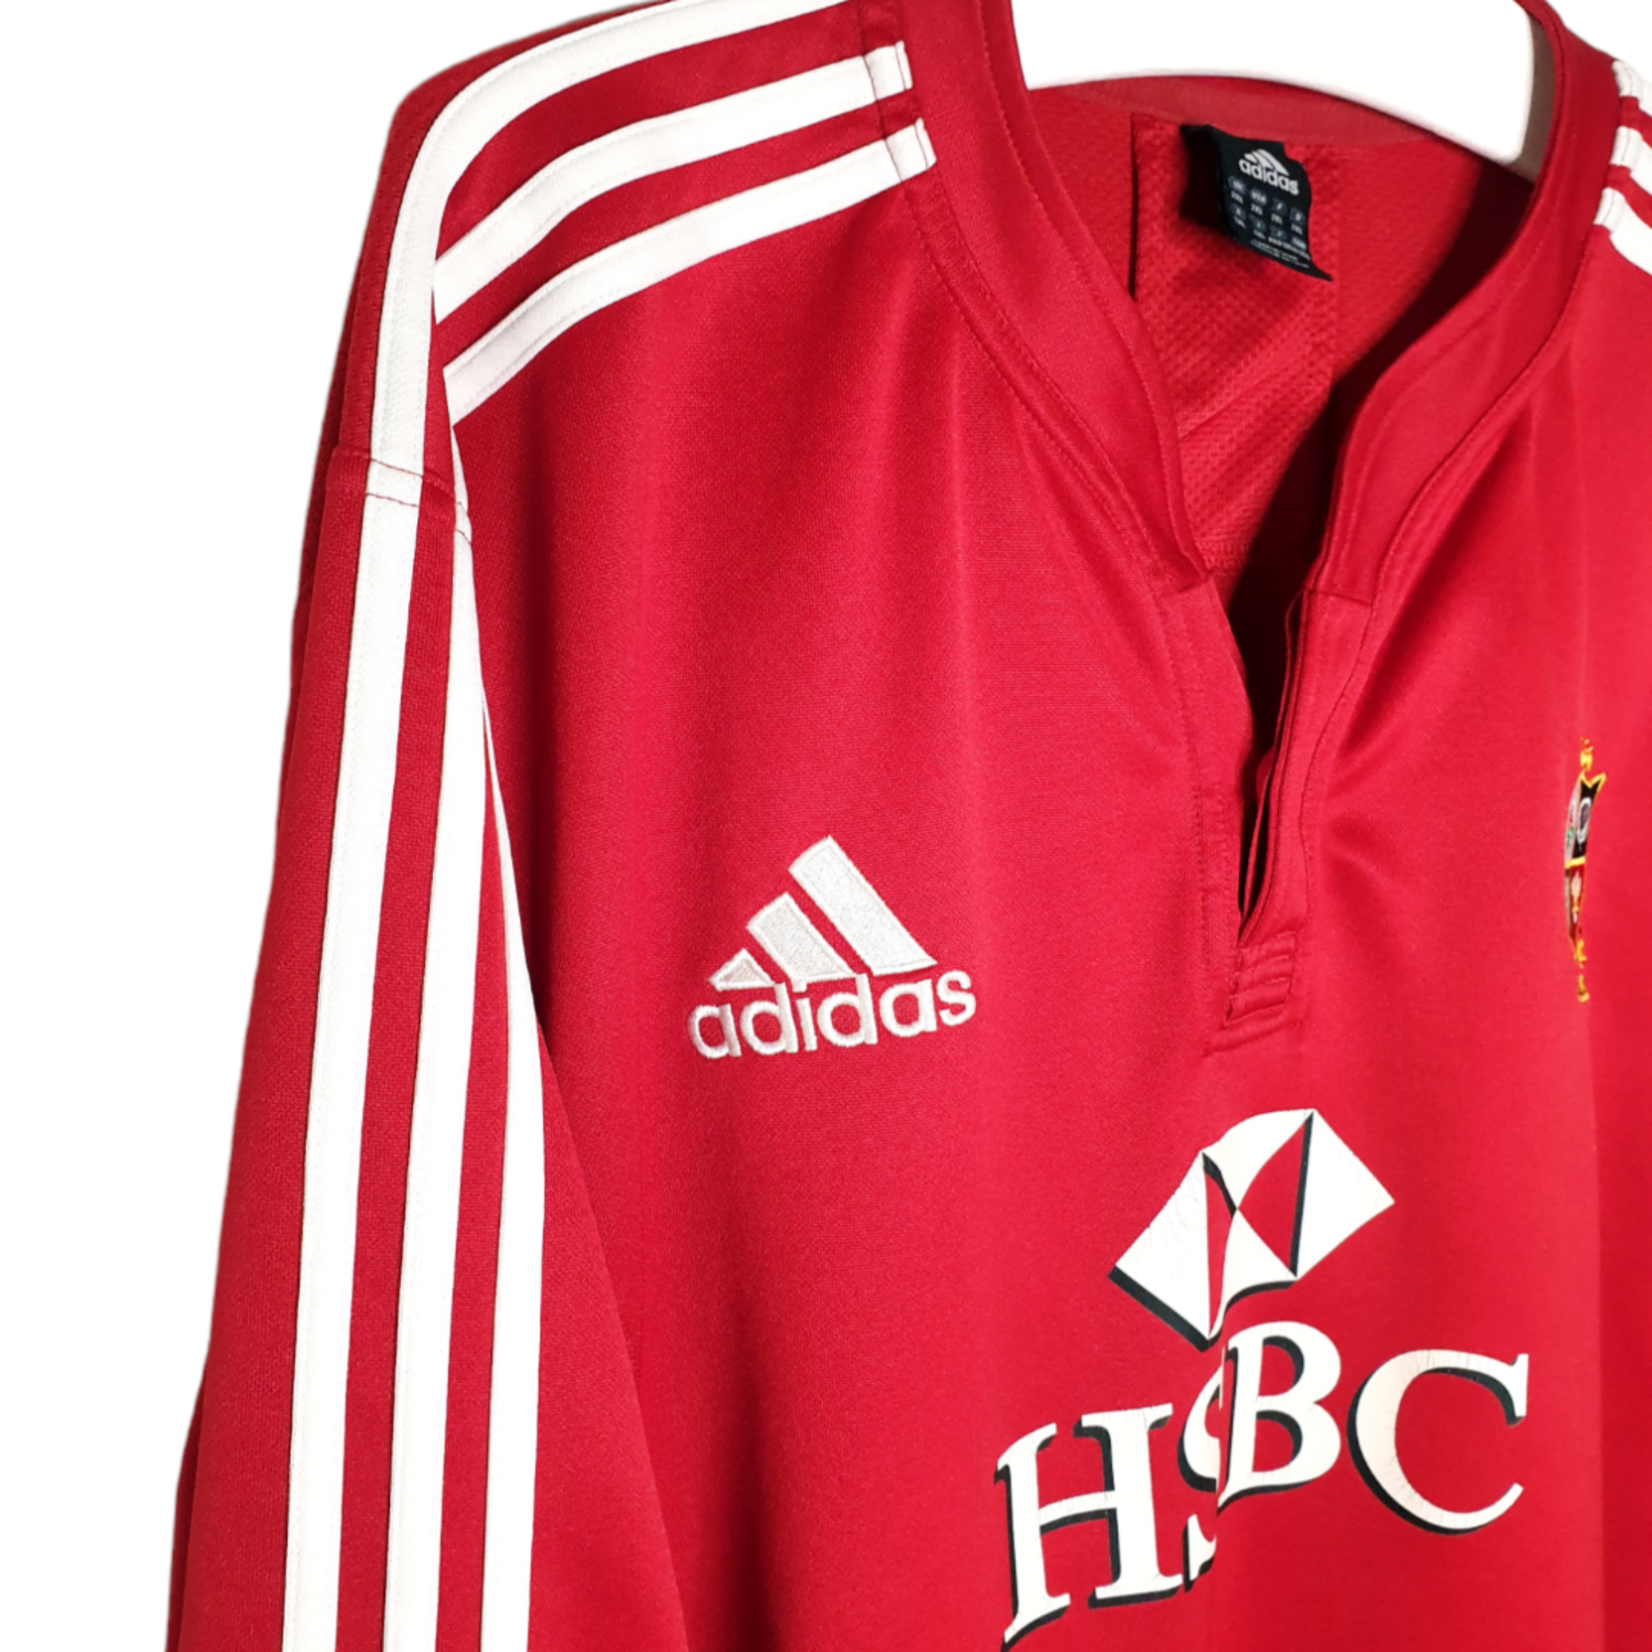 Adidas Original Adidas Vintage Rugby-Shirt British & Irish Lions 2009